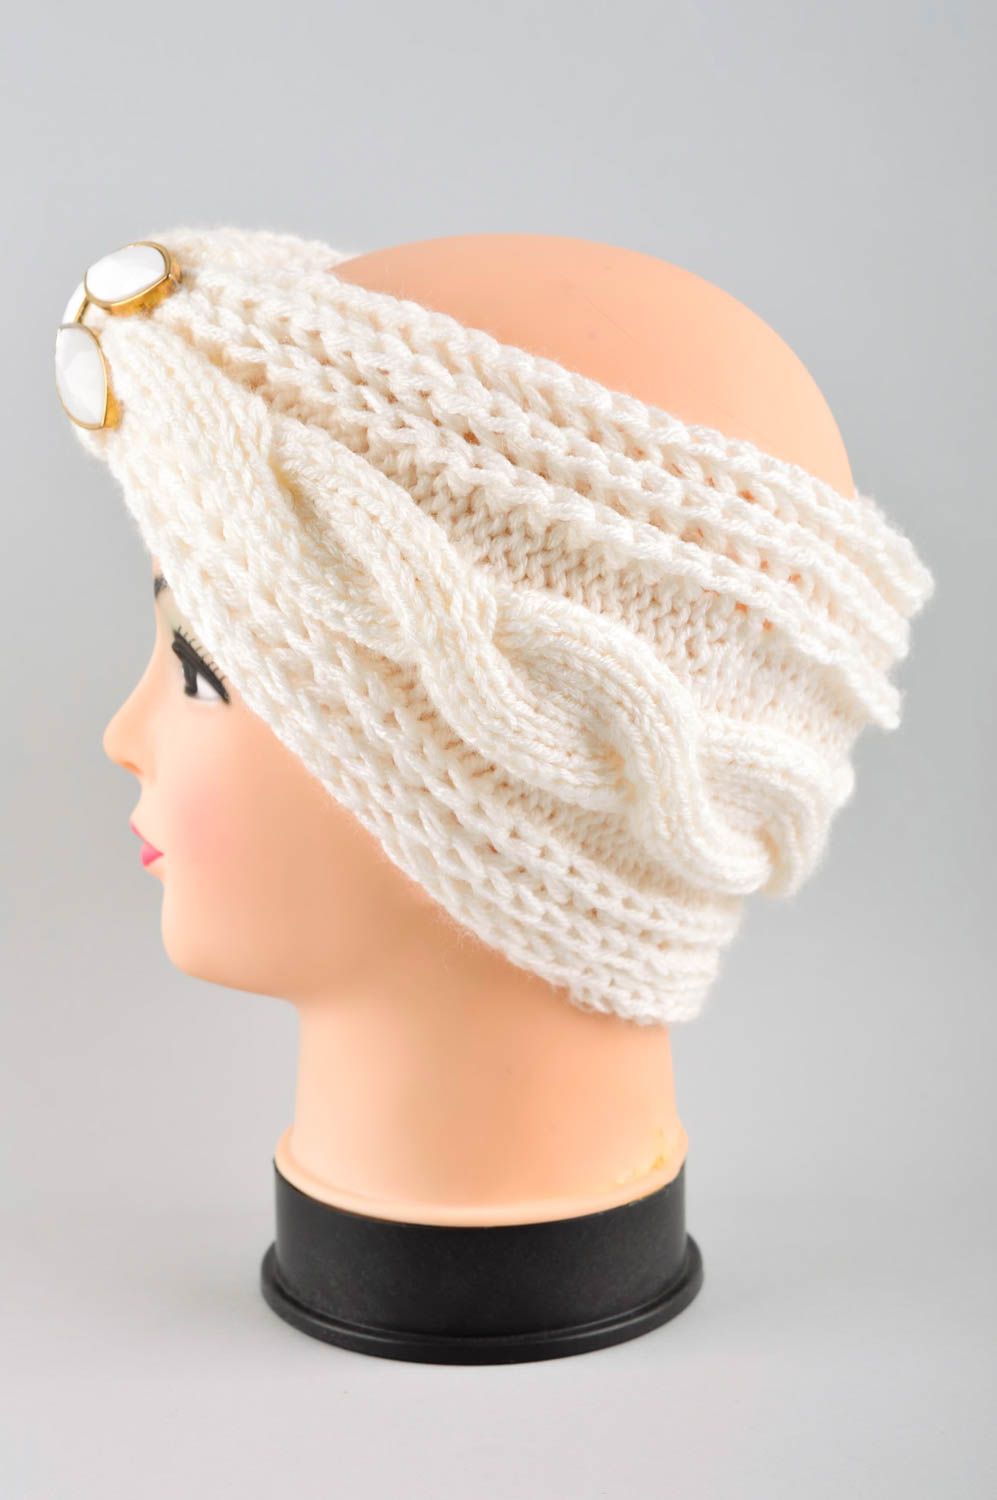 Handmade festive headband knitted stylish turban accessory in Eastern style photo 3